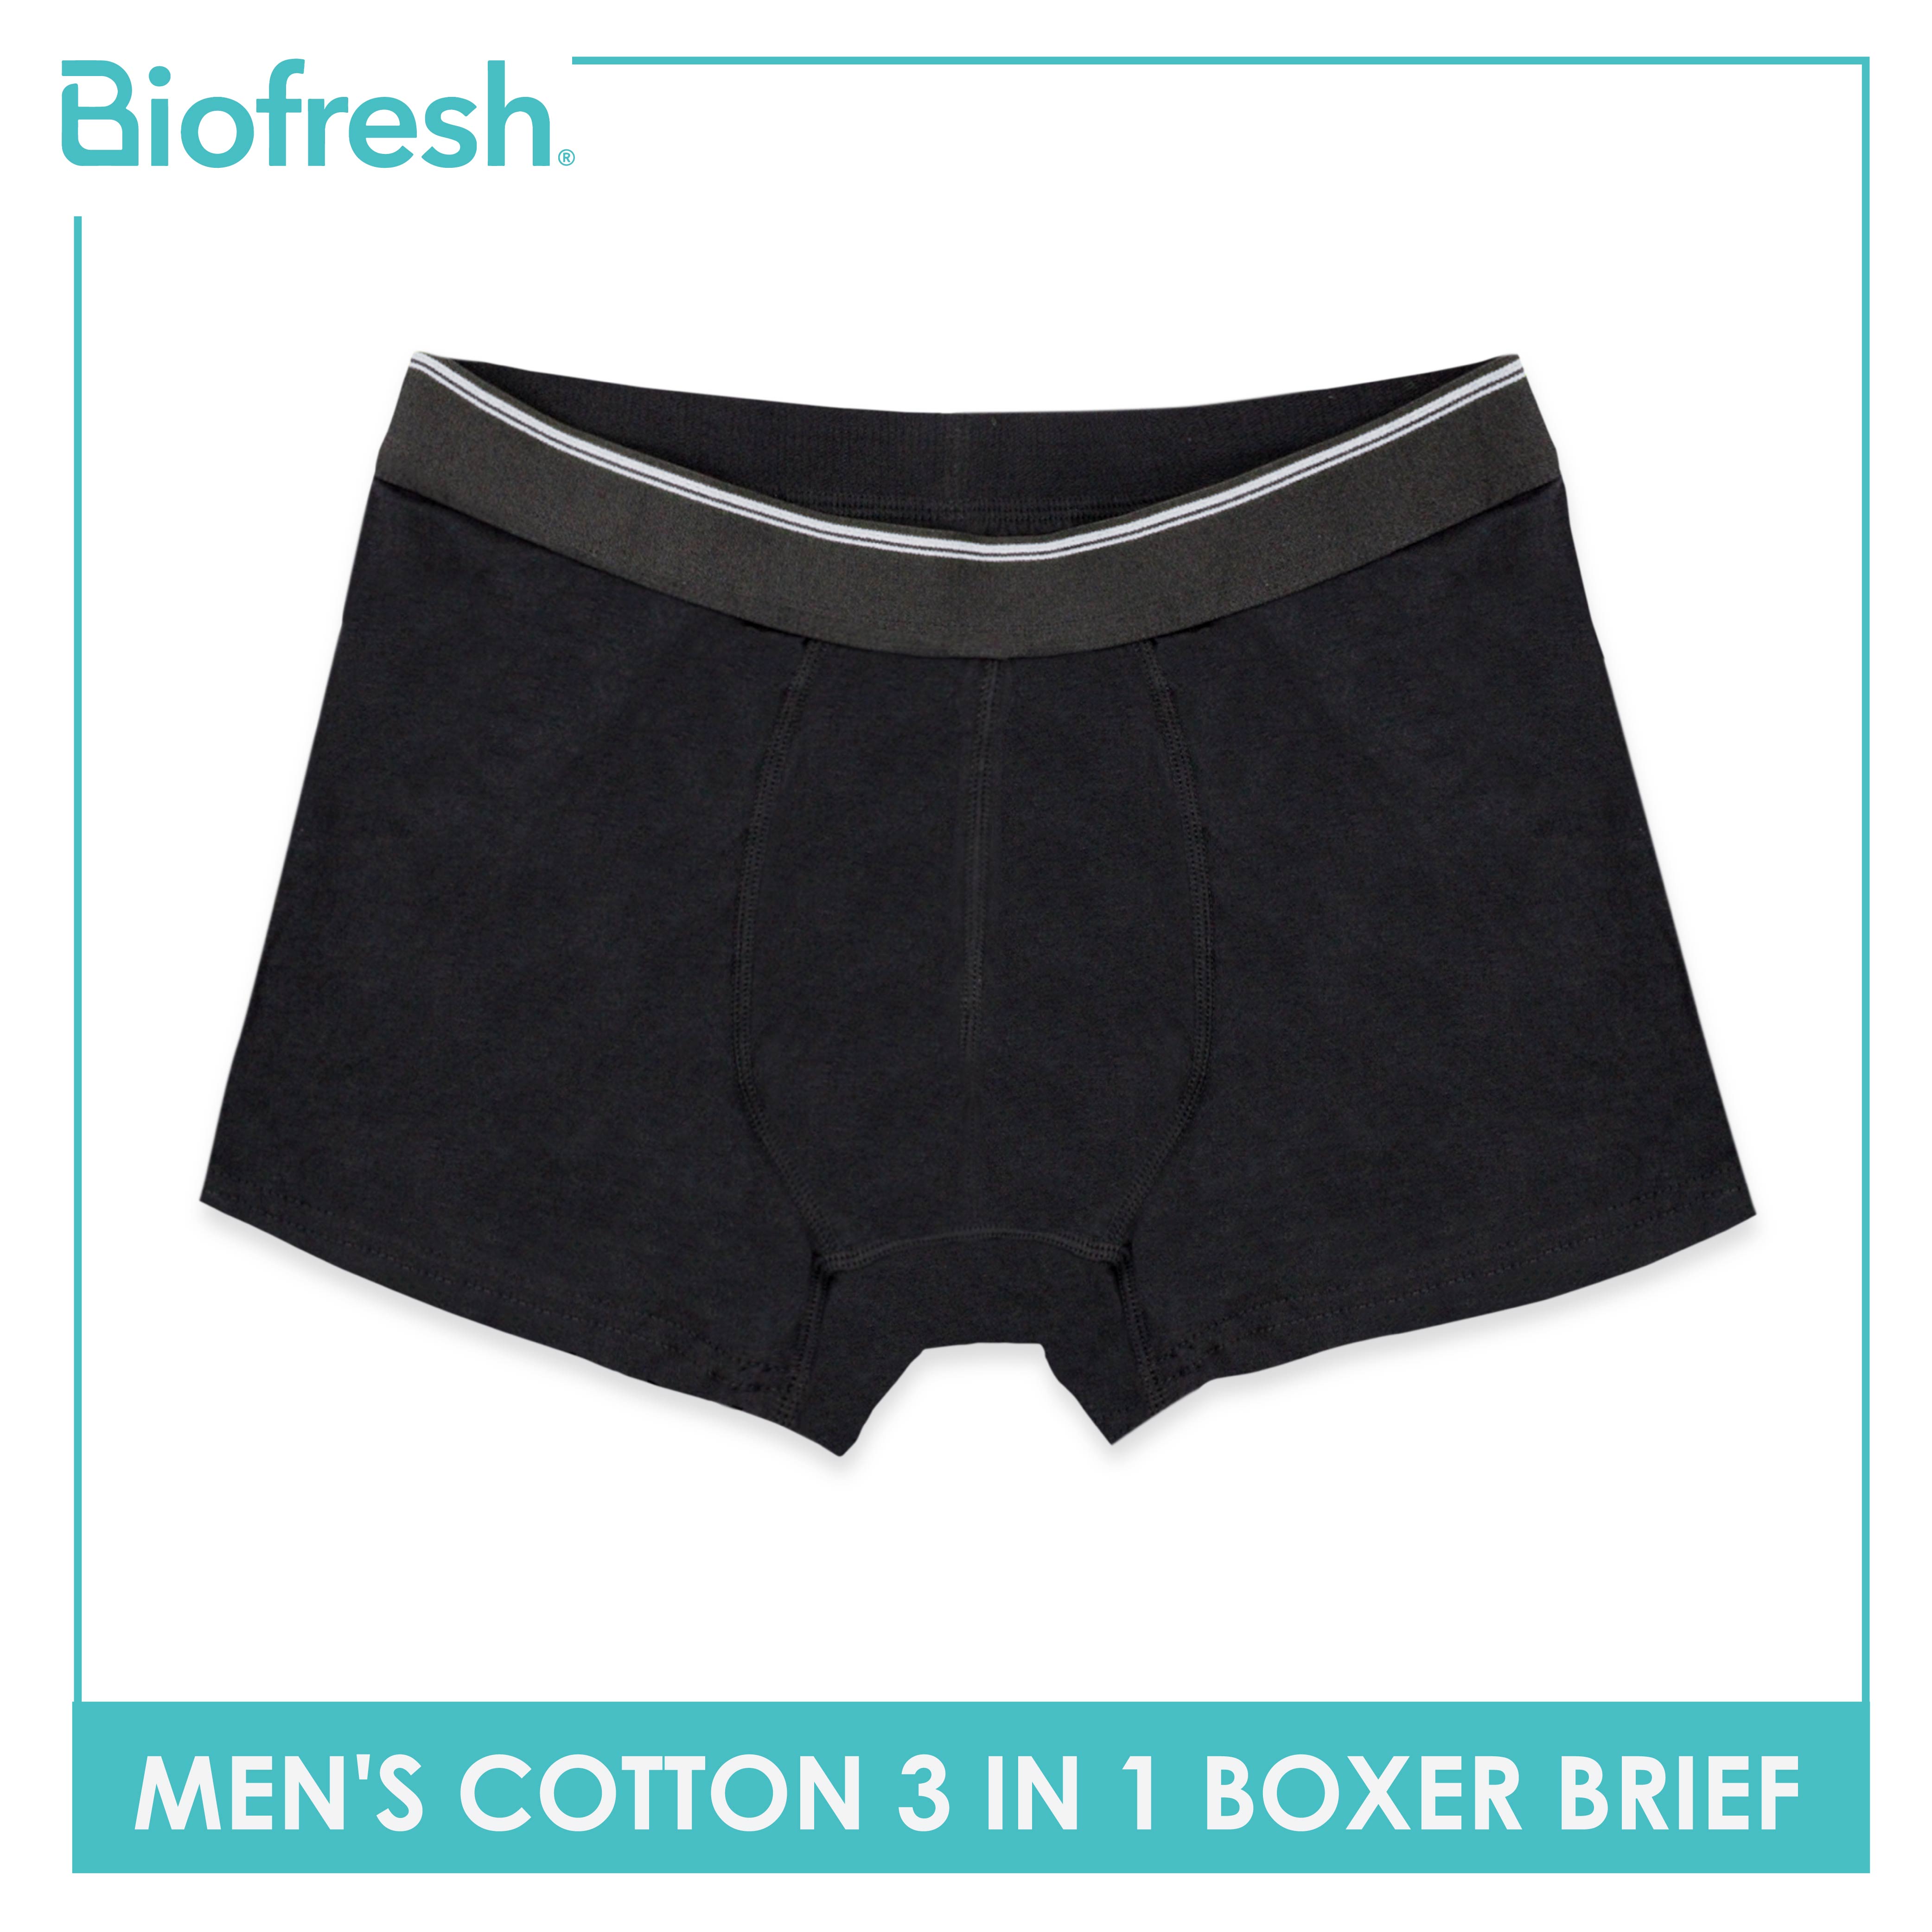 Men's Antimicrobial Cotton Boxer Brief